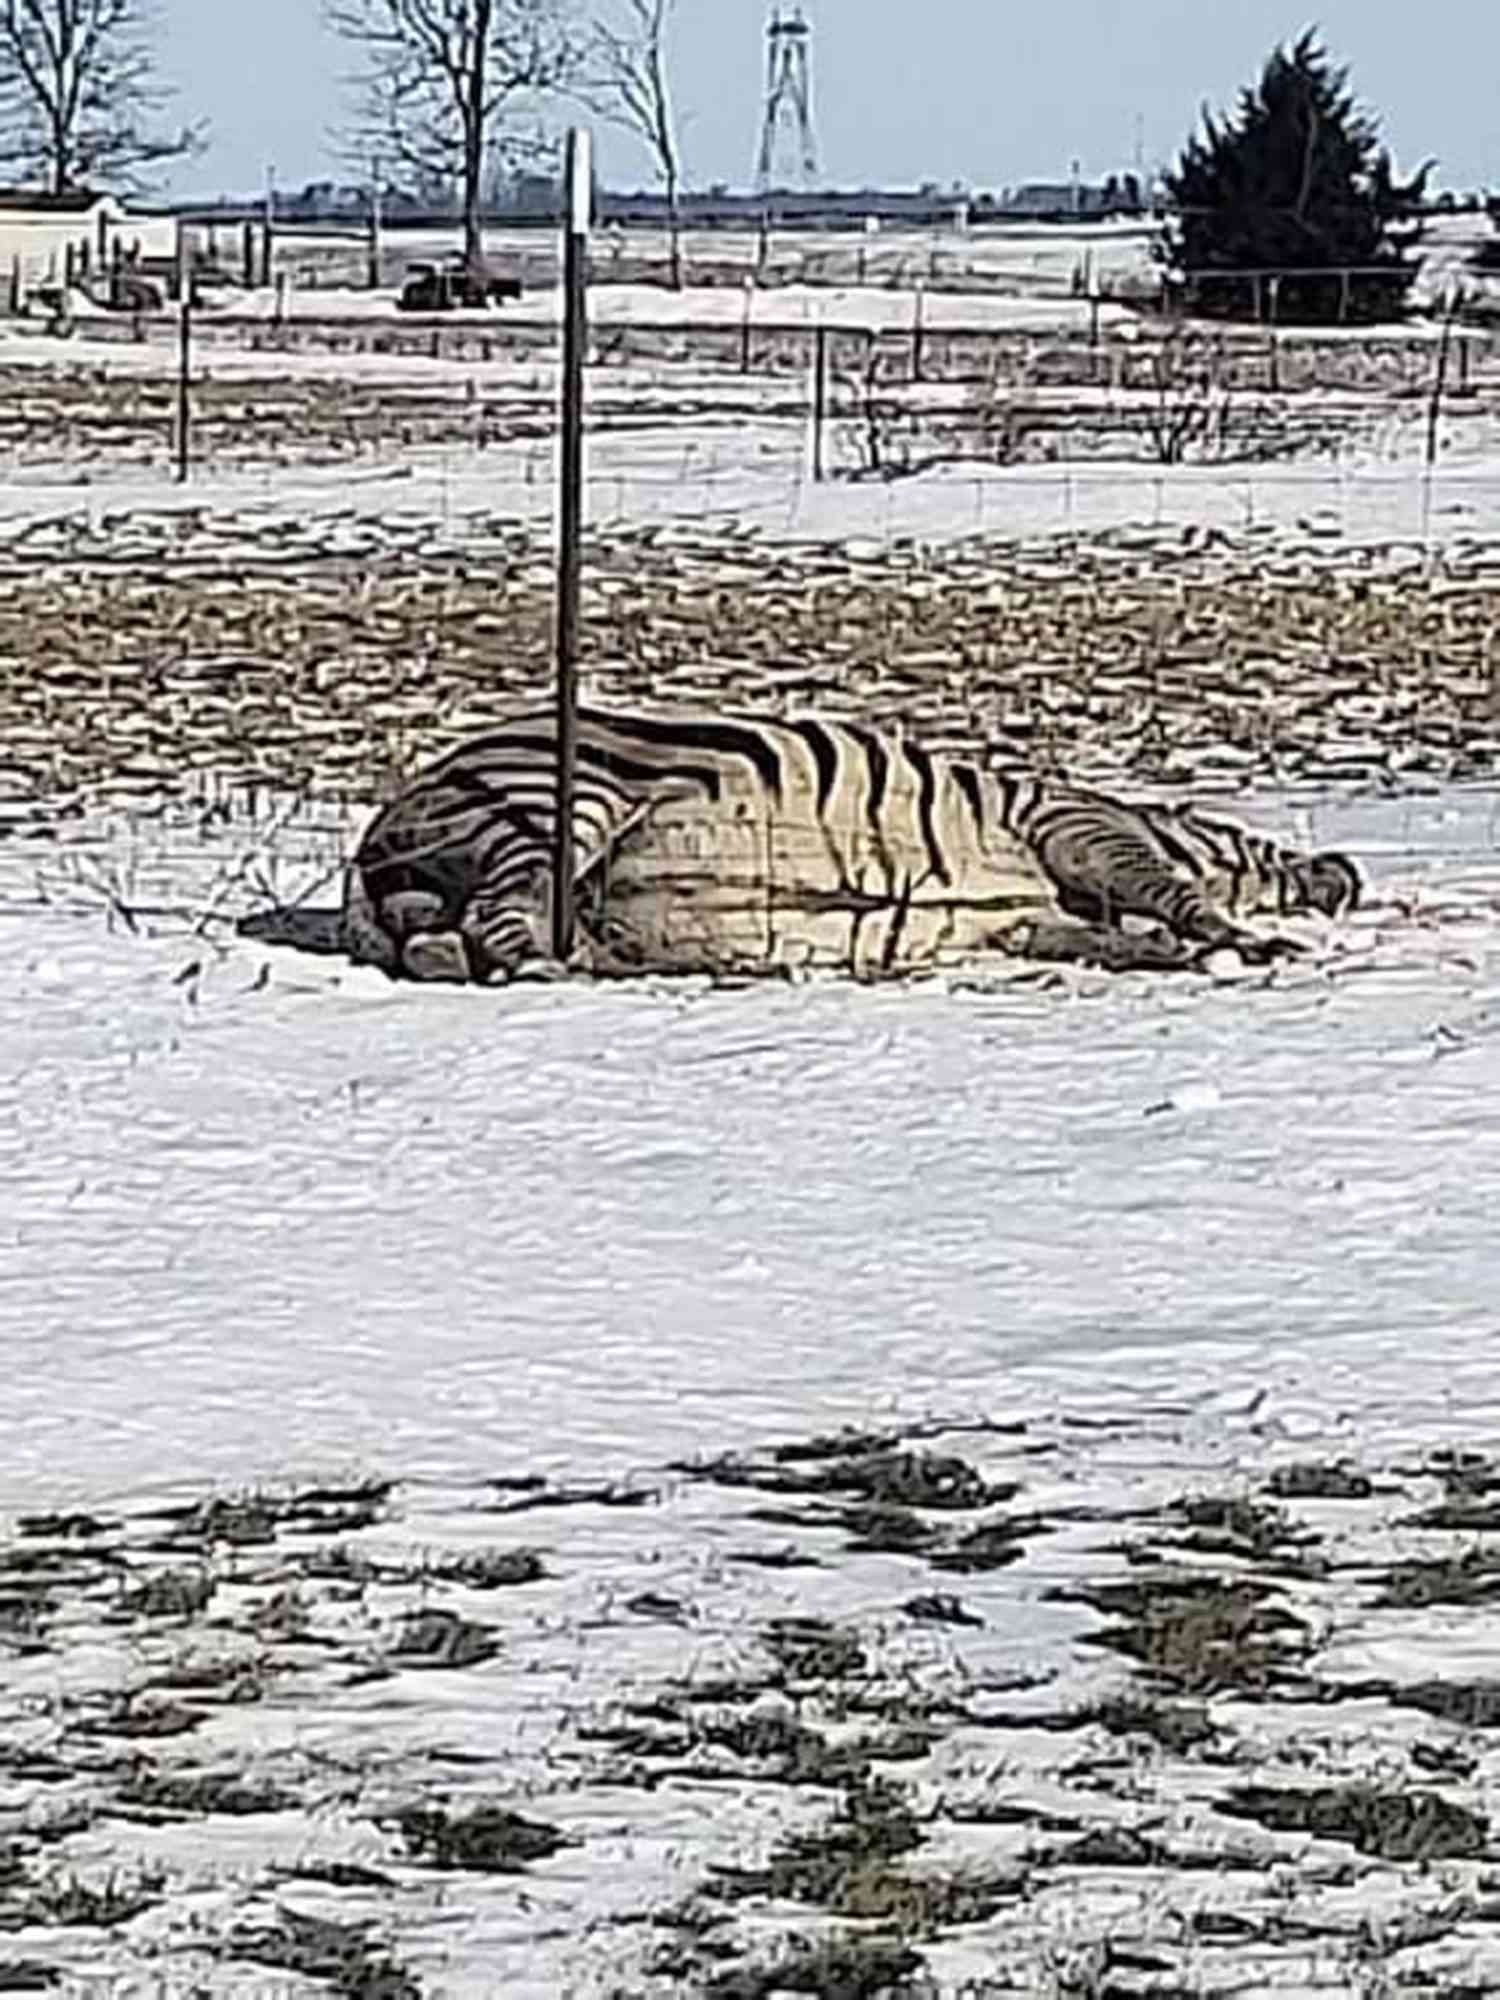 dead zebra weatherCredit: Courtesy Sonya Kendall